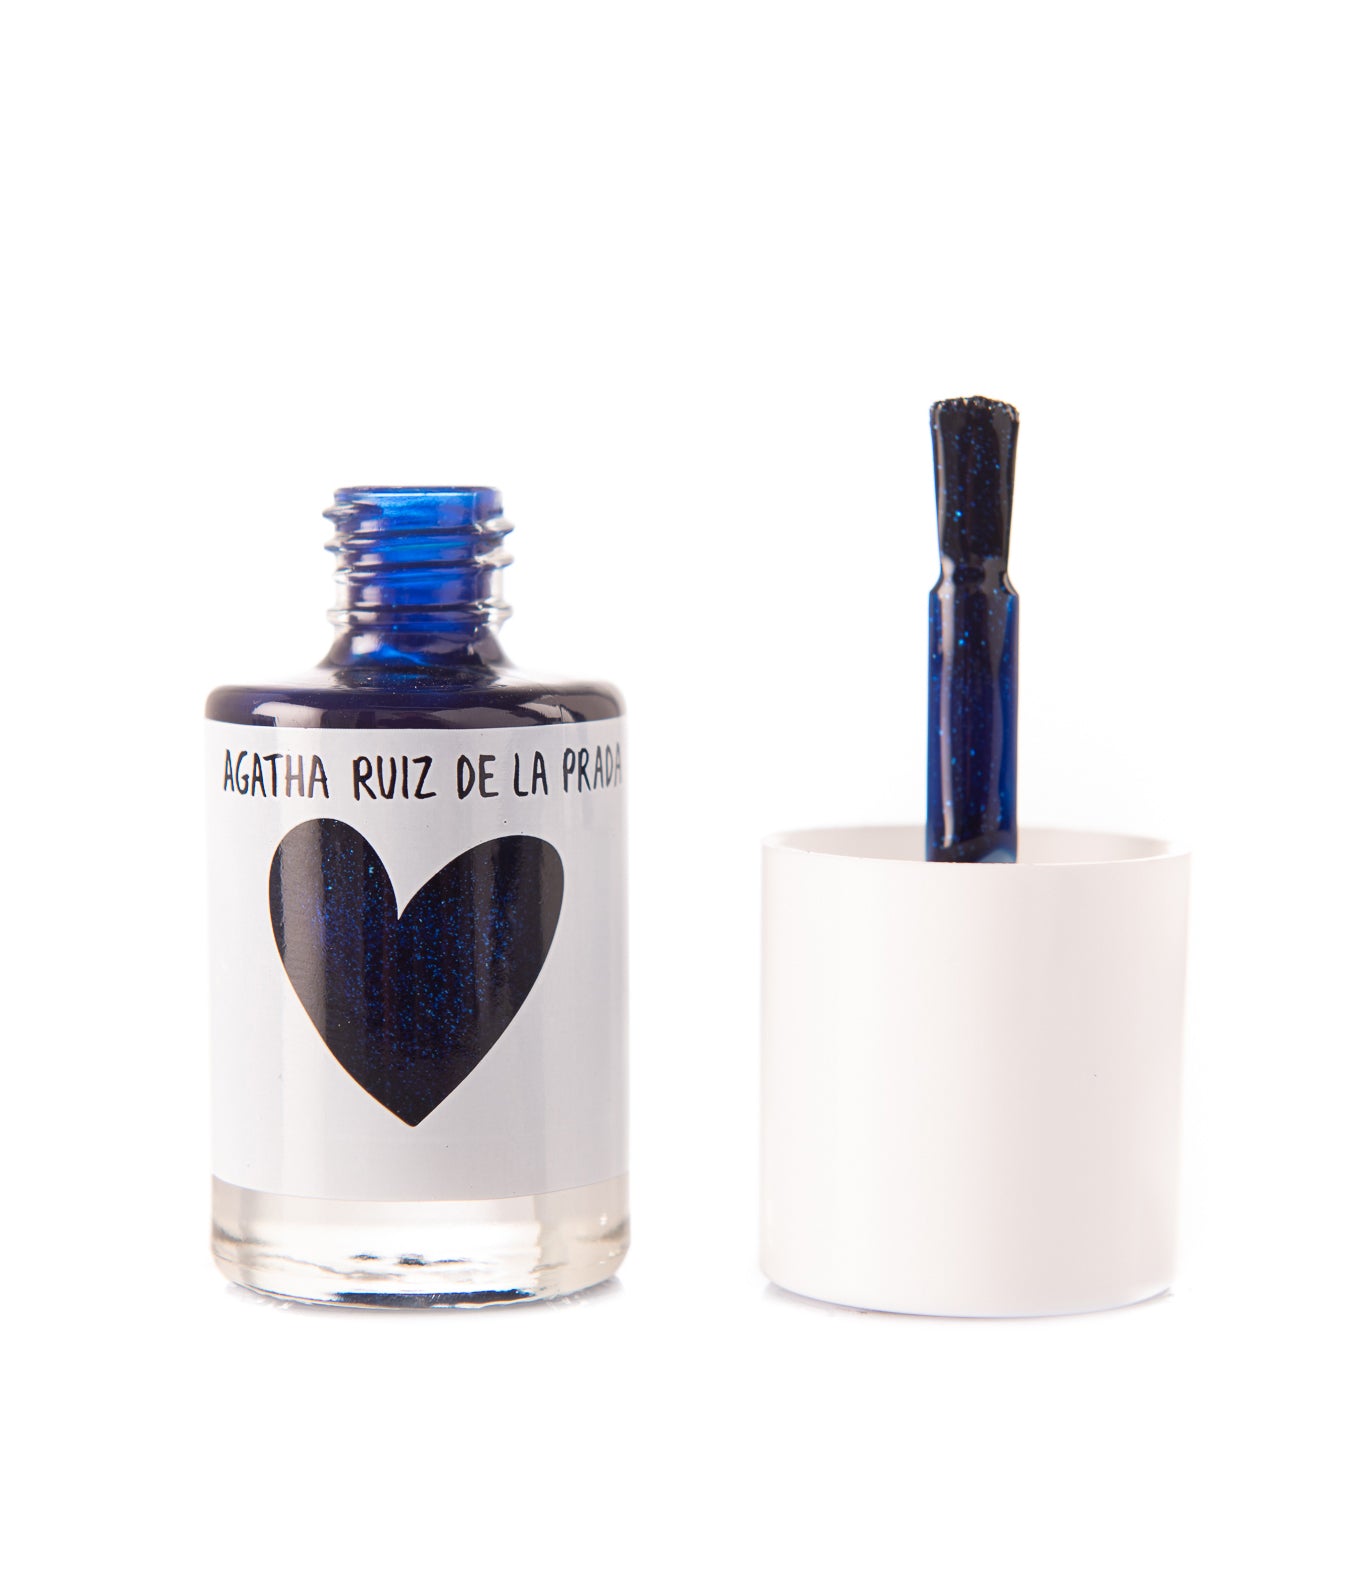 Agatha Ruiz de la Prada Nail Polish - Open Bottle with Cap and Brush Glitter Royal Blue